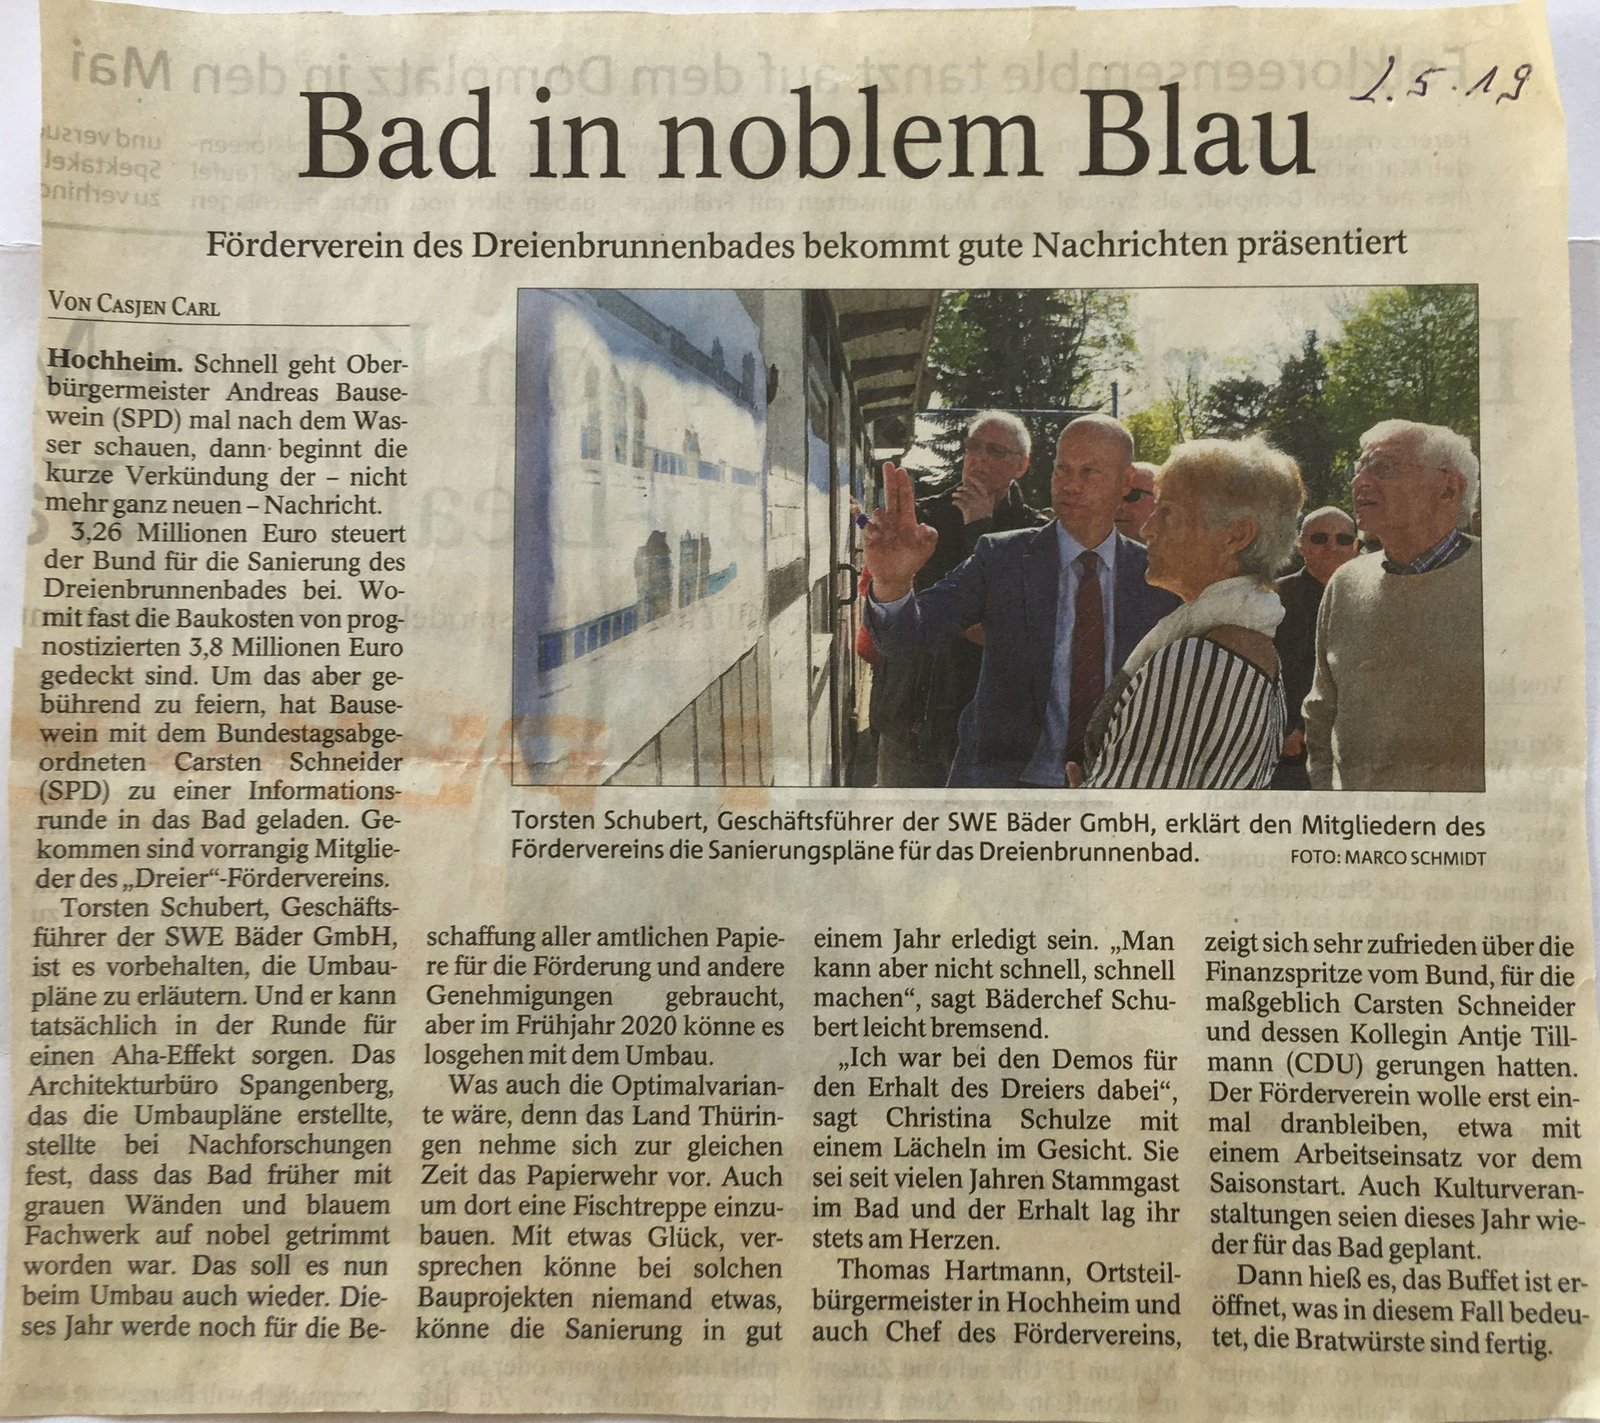 Presse: Bad in noblem Blau, Bild: Quelle: TA 2.5.2019